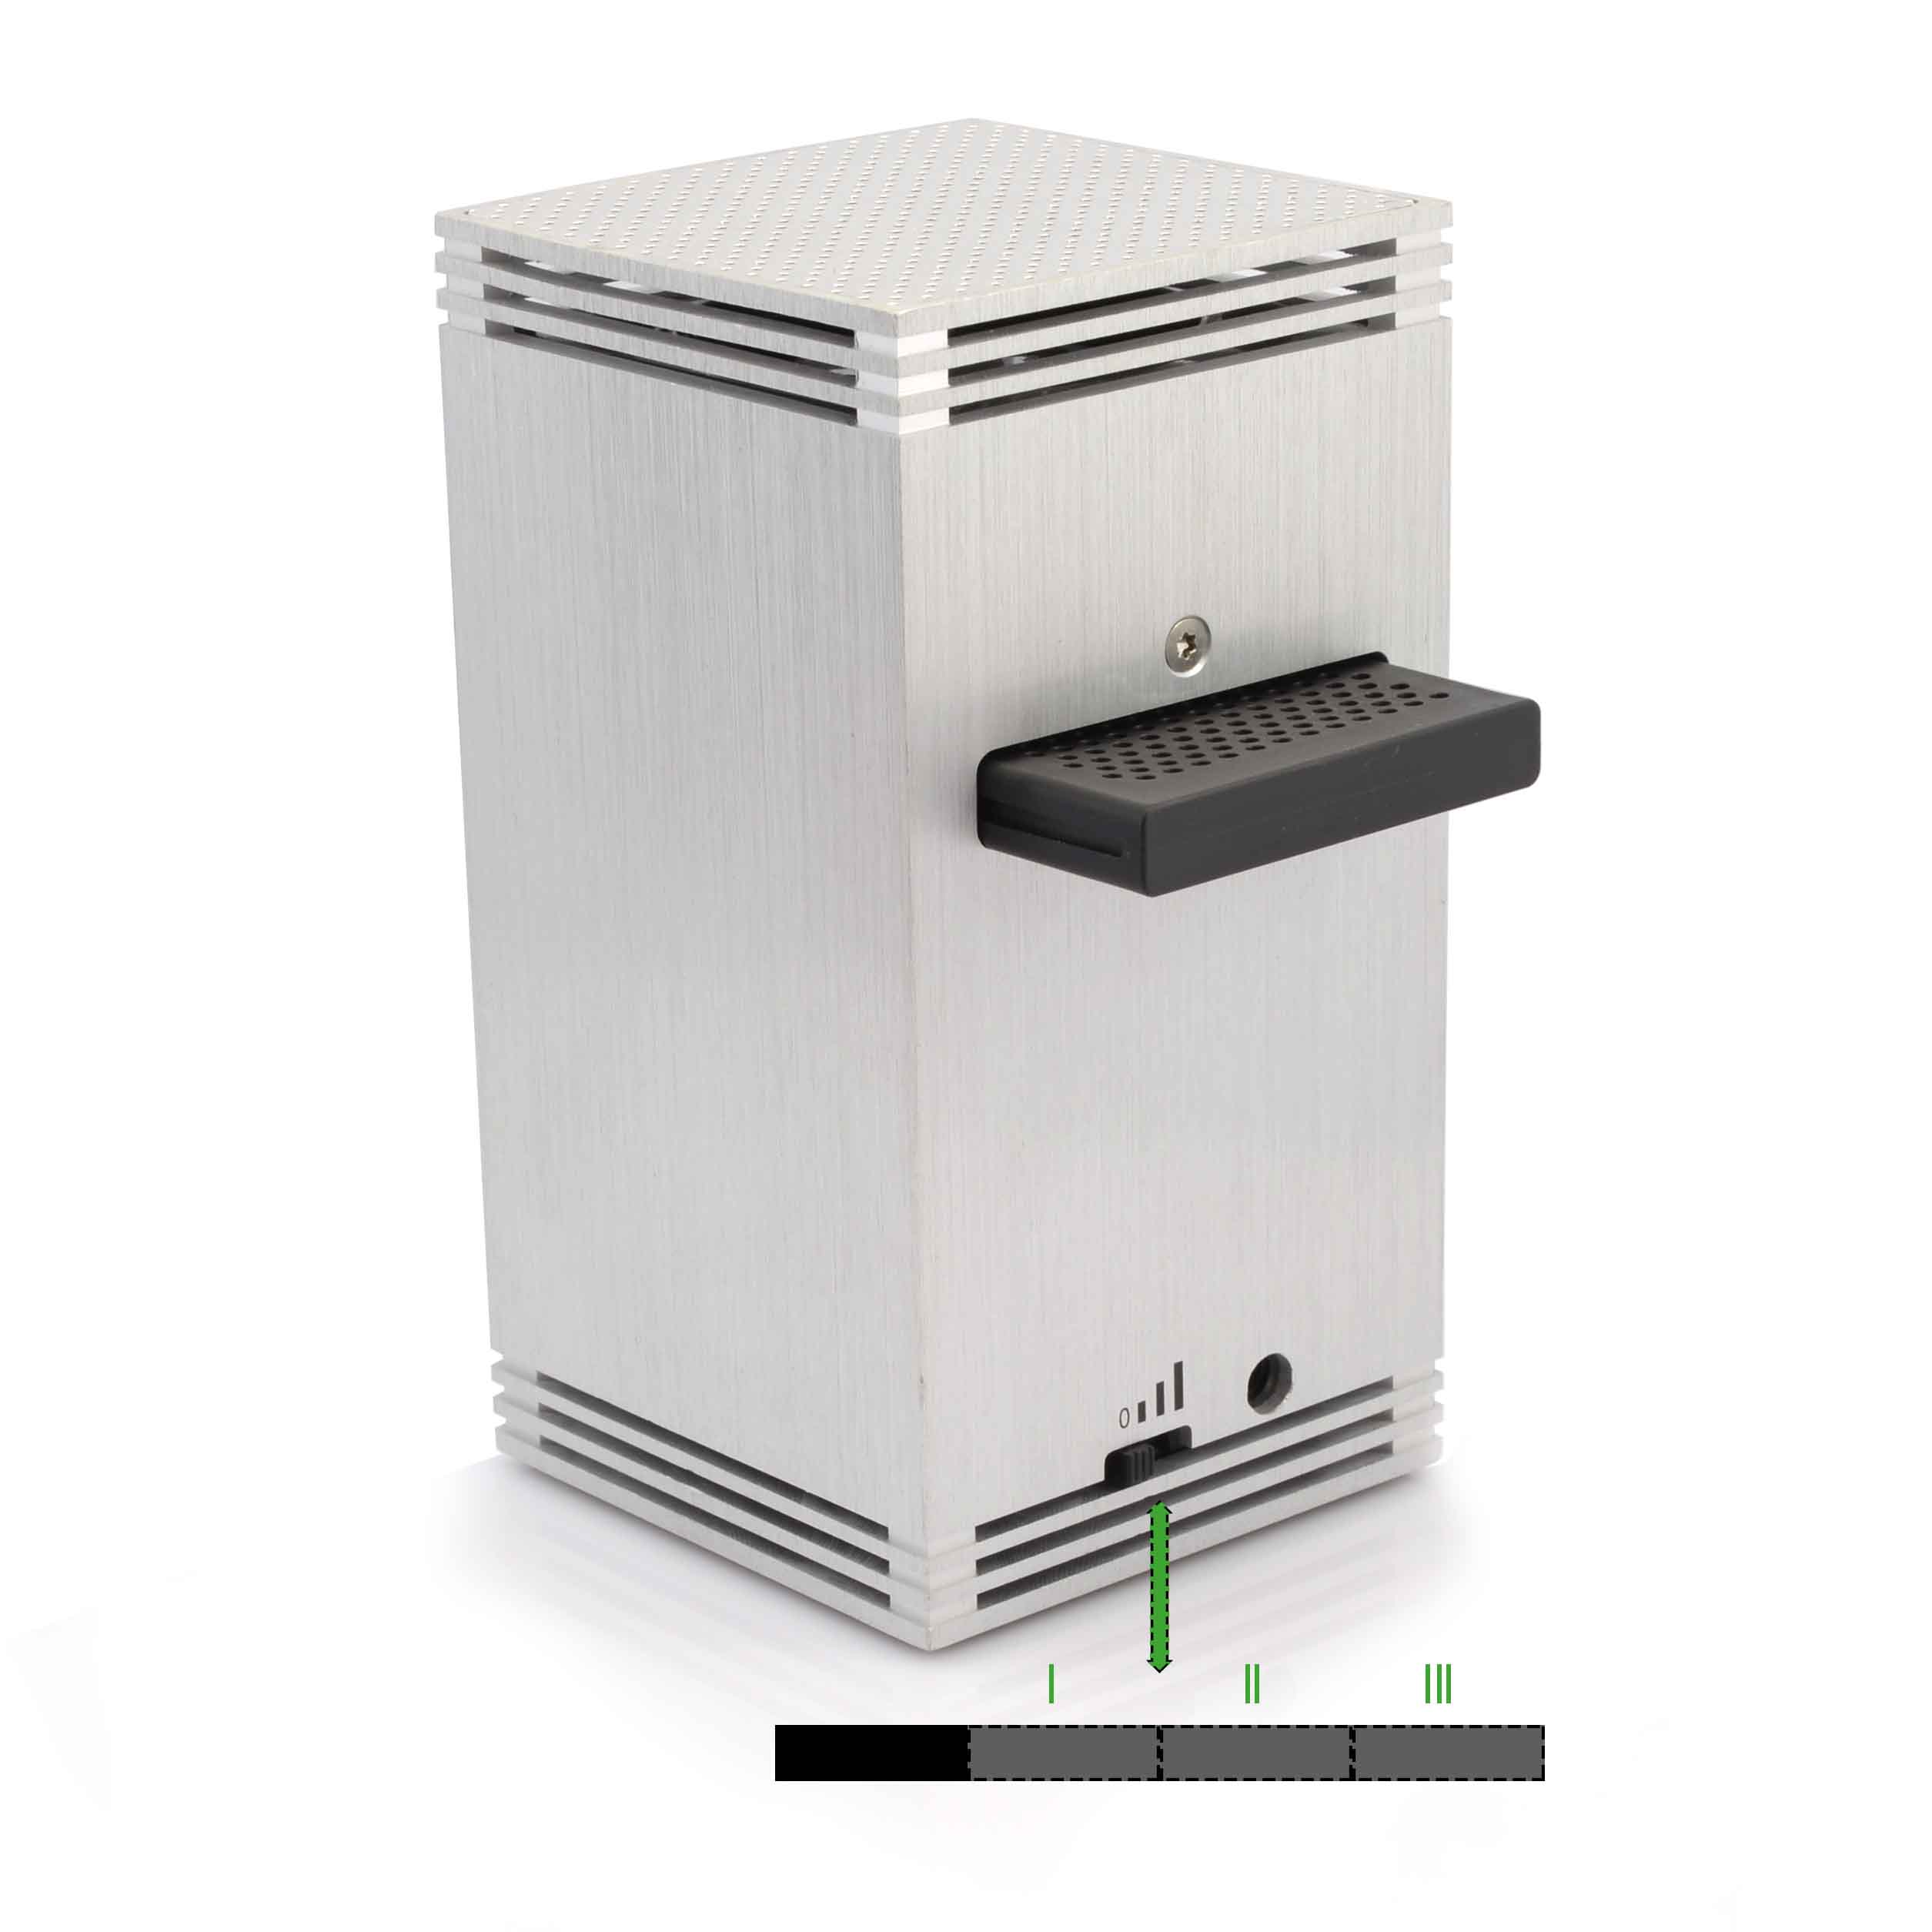 pure-air-tech-3-phase-air-freshener-cleaner-purifier-airflow-setting